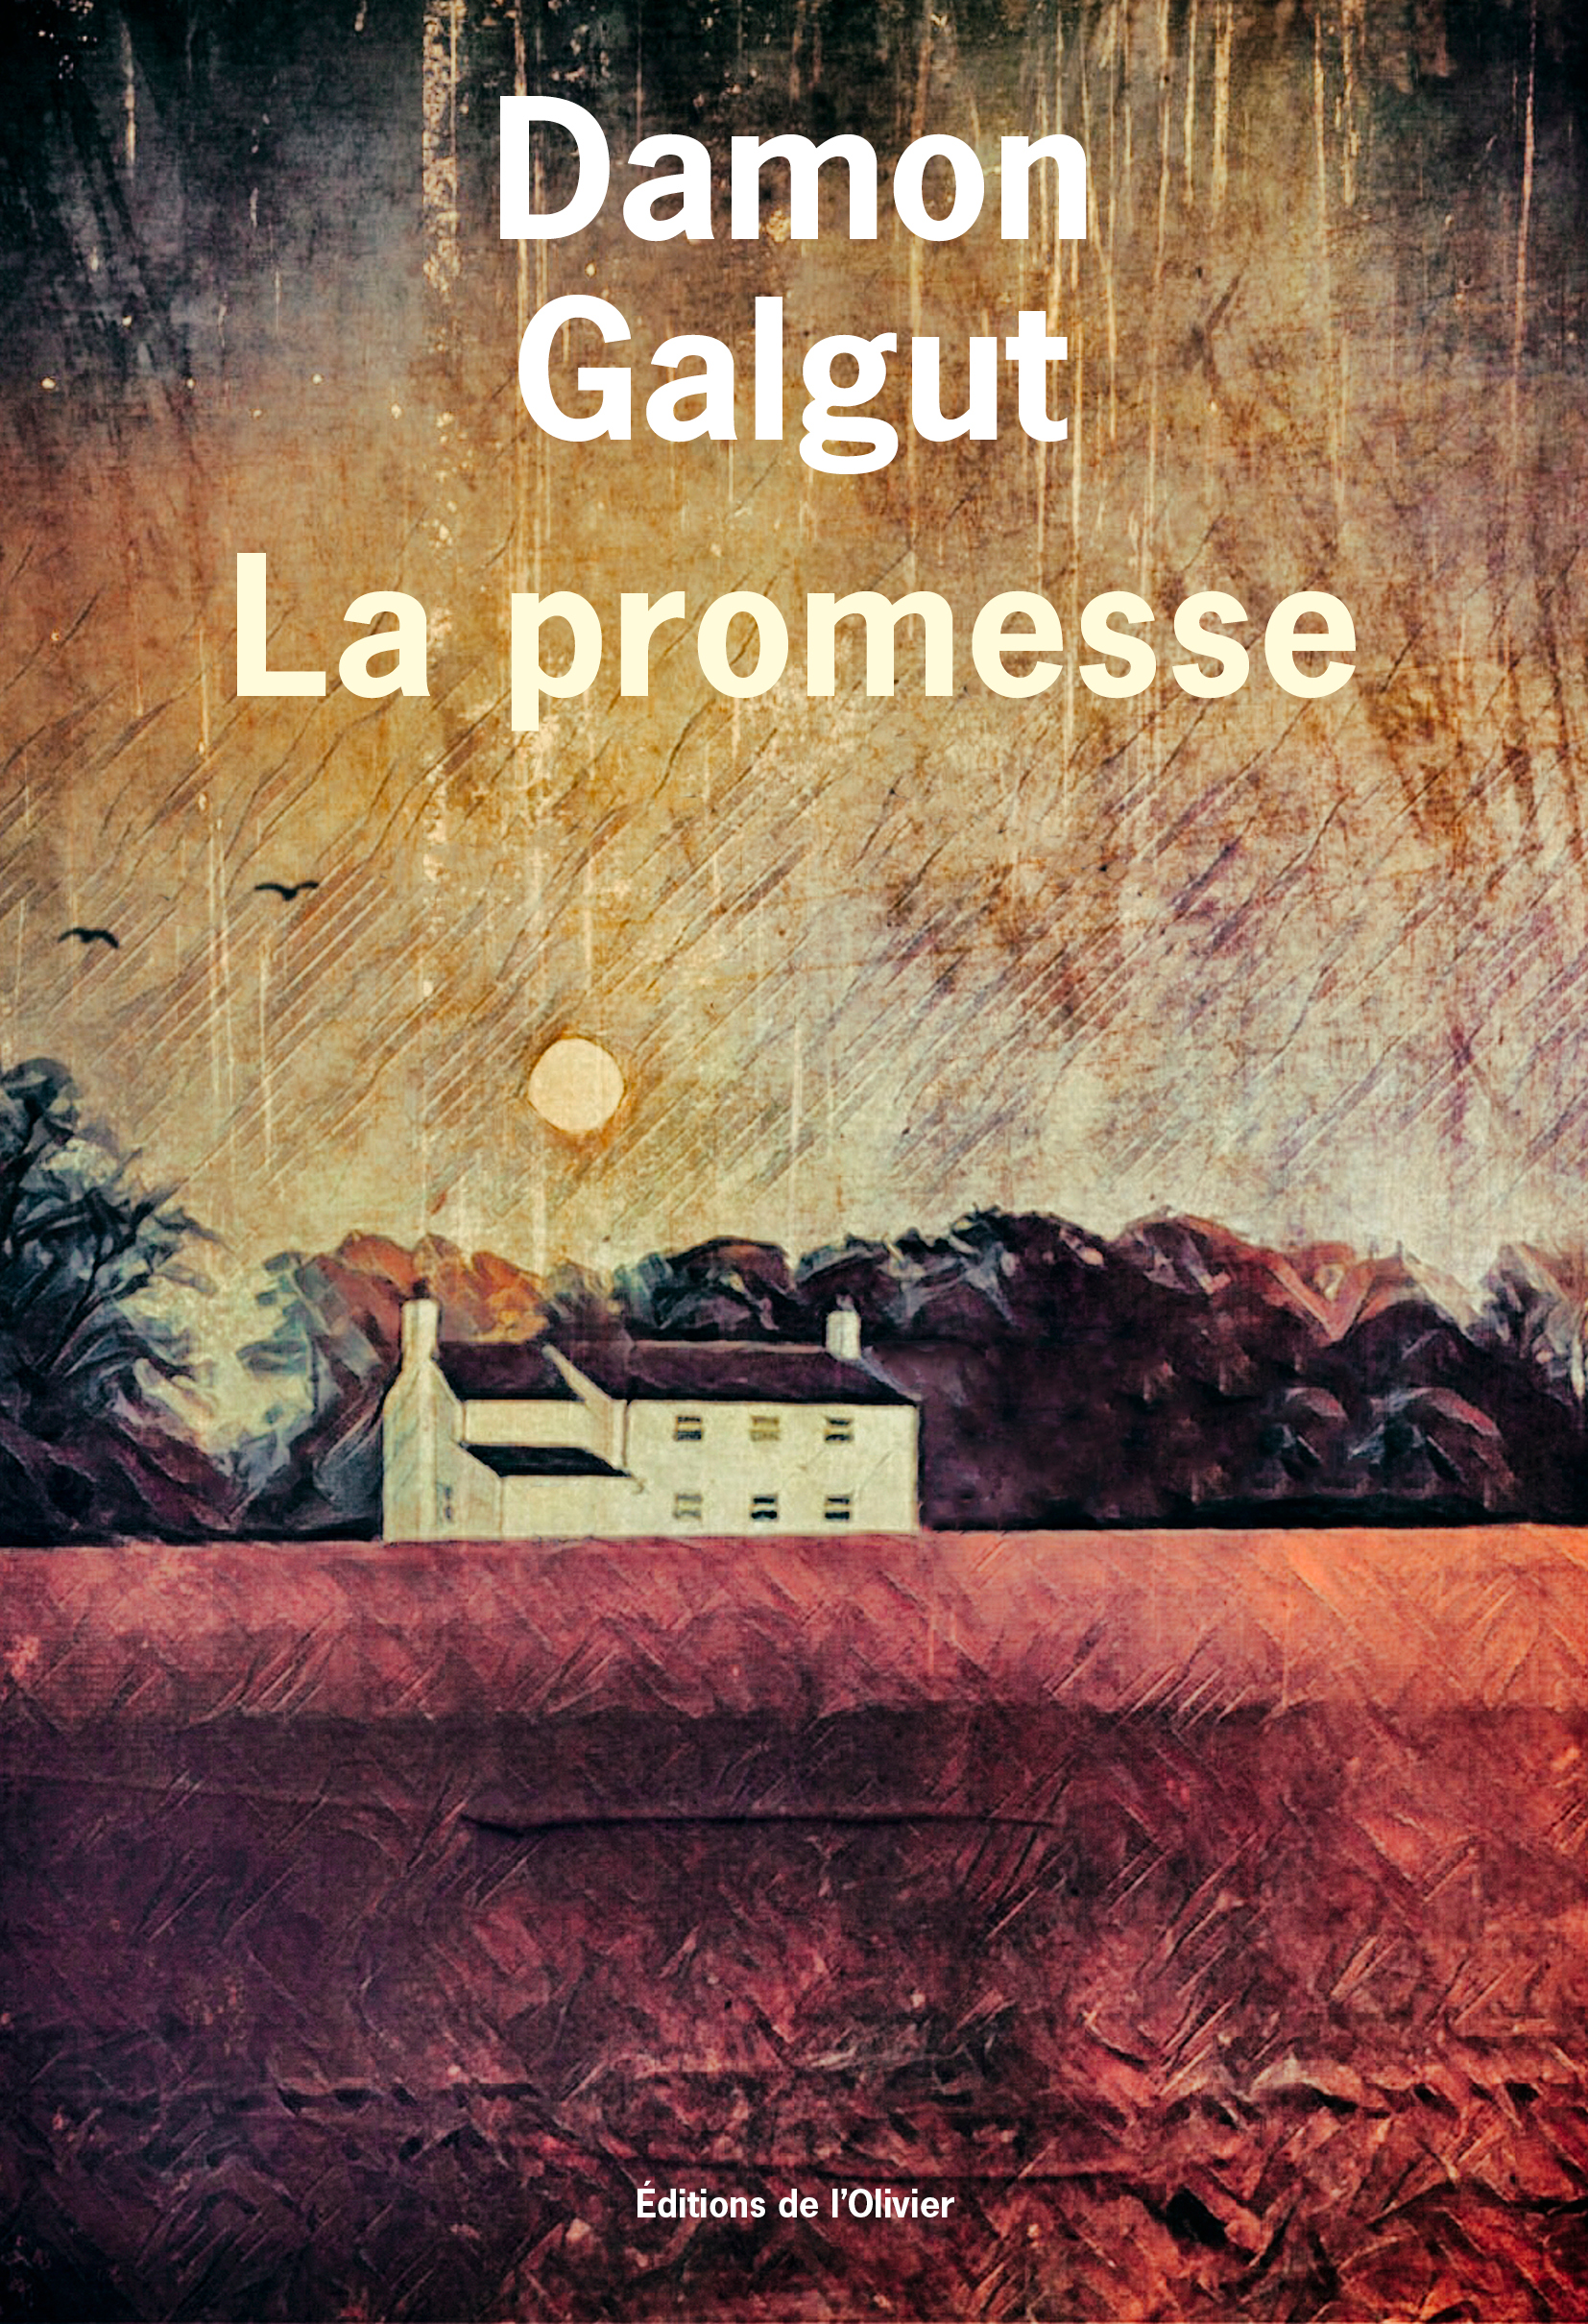 Afficher "La Promesse"